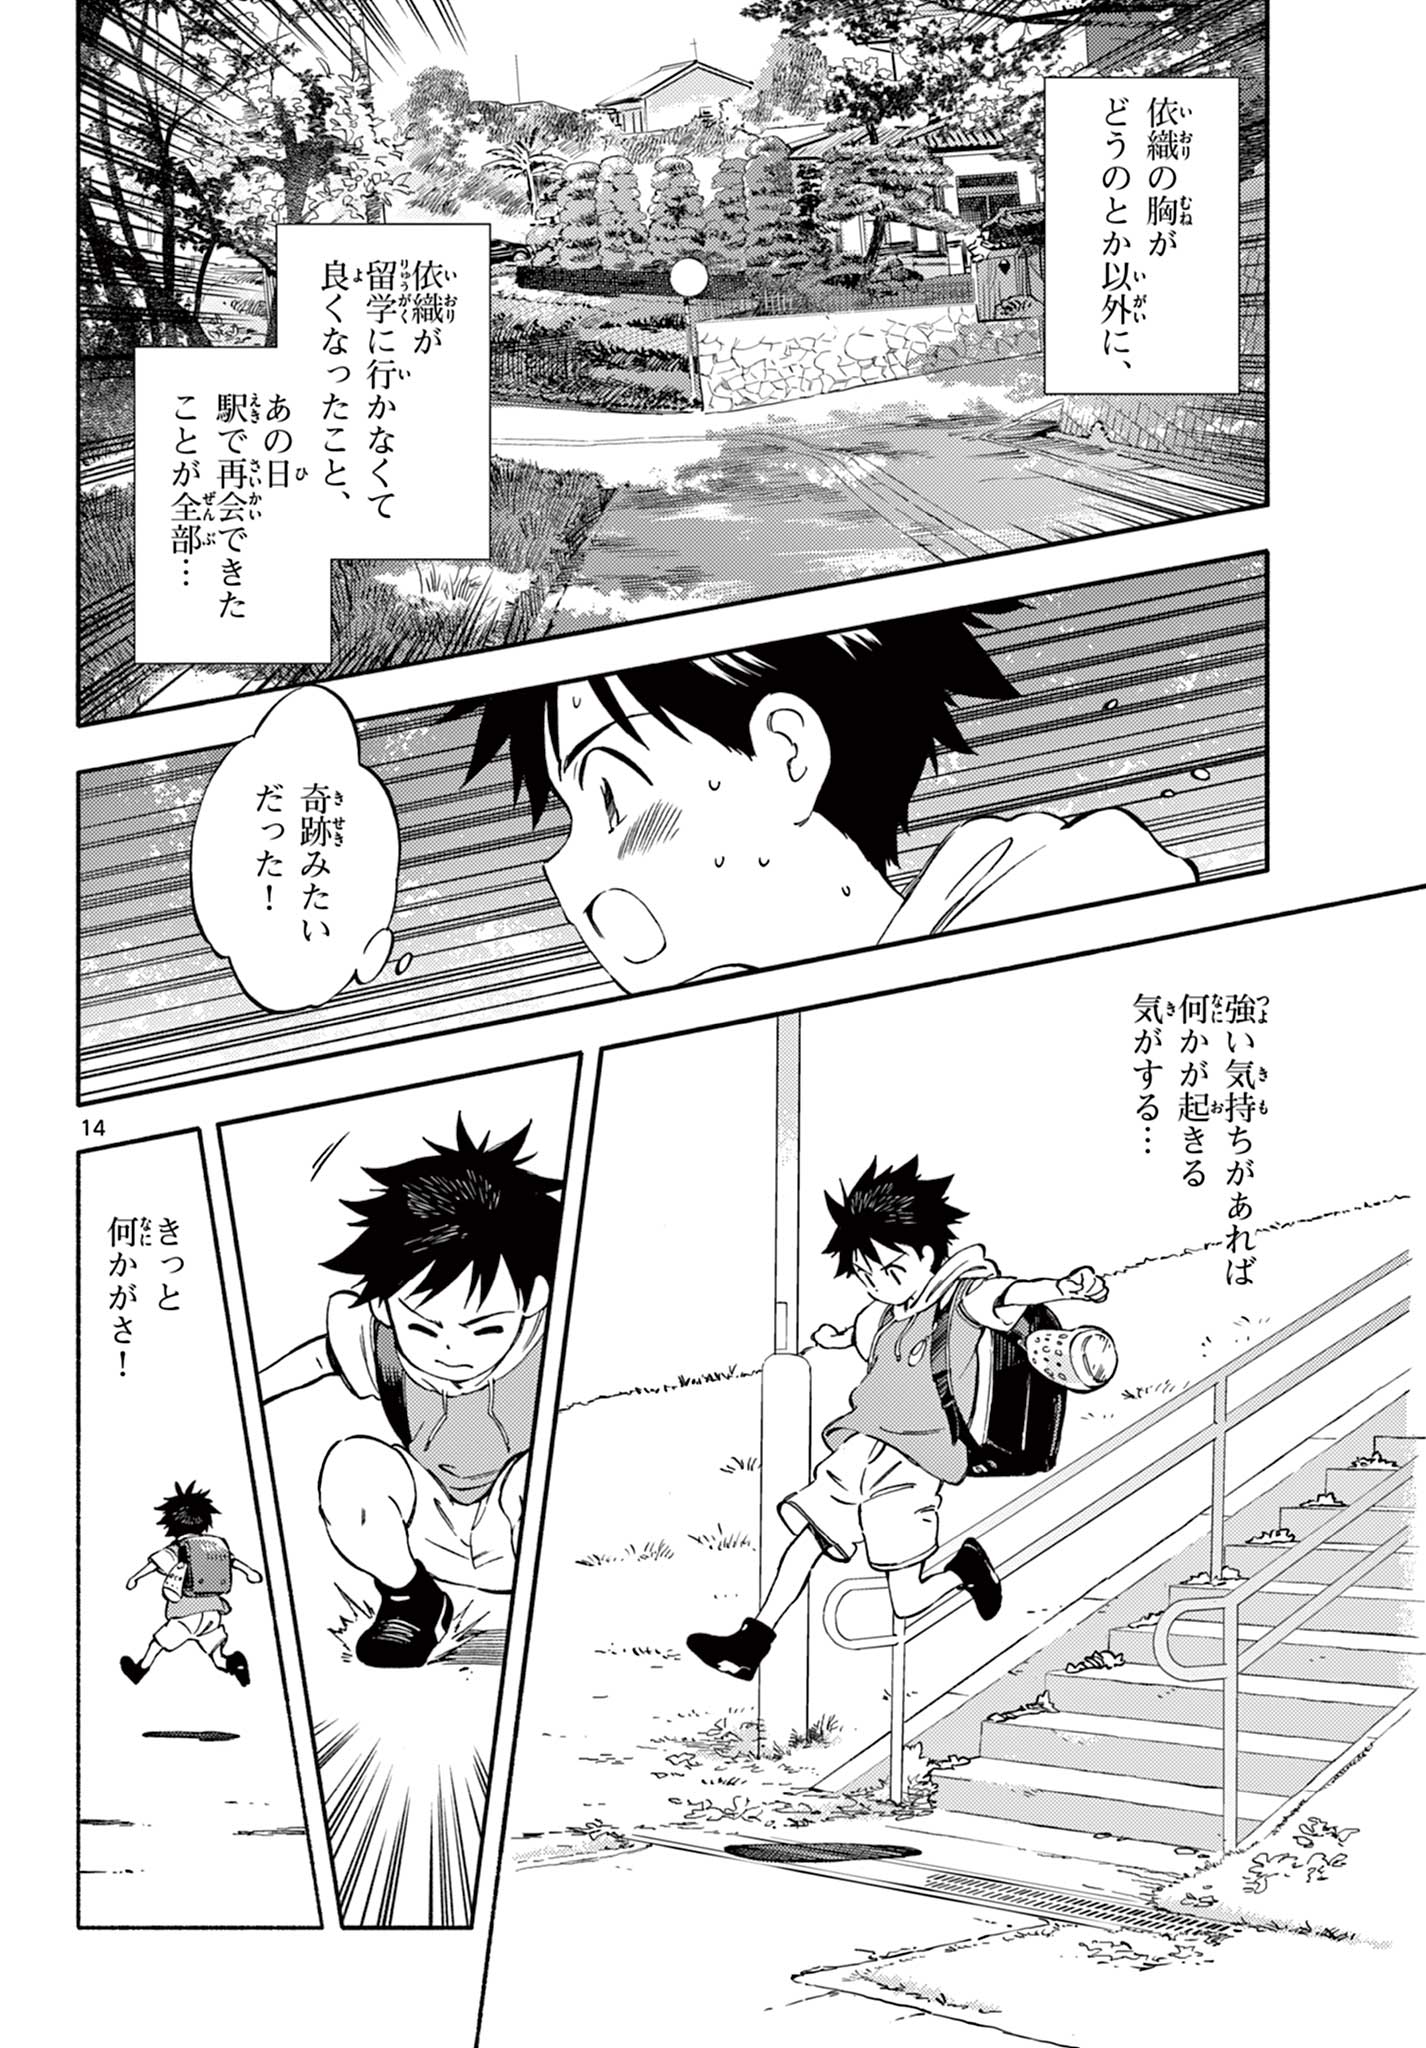 Nami no Shijima no Horizont - Chapter 15.1 - Page 14